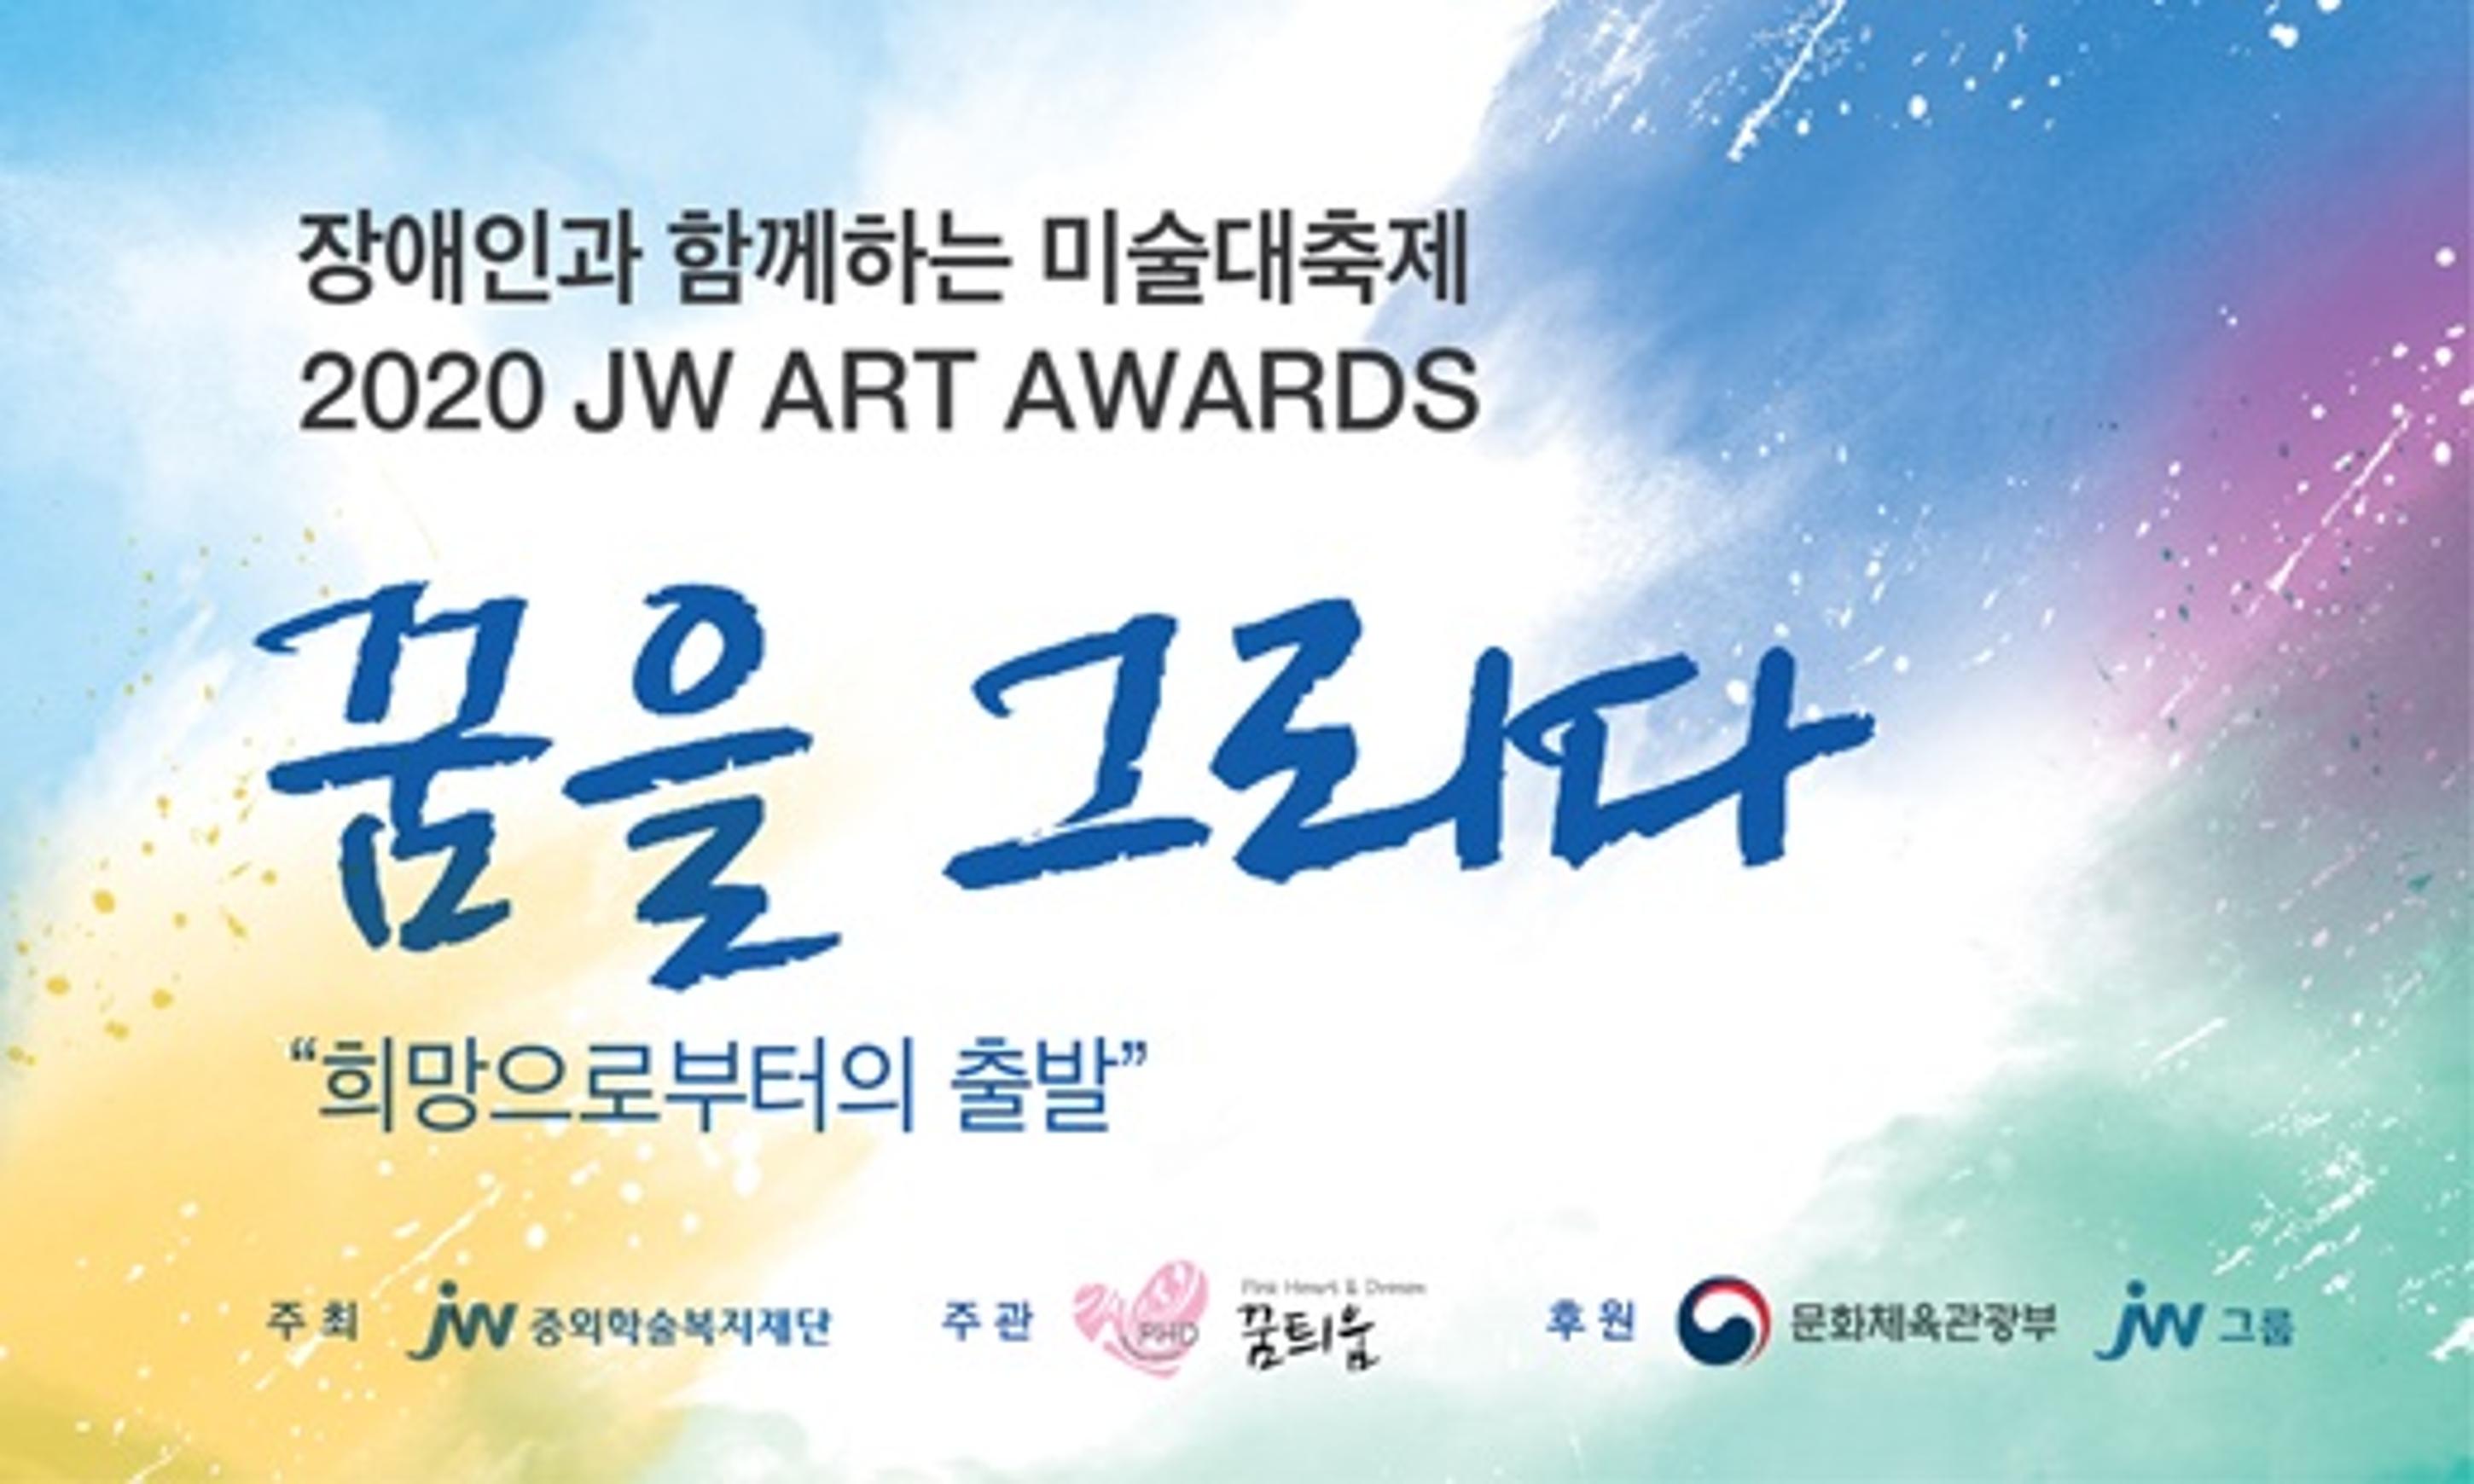 <p>장애인과 함께하는 미술대축제<br>2020 JW ART AWARDS</p>
<p>꿈을 그리다</p>
<p>